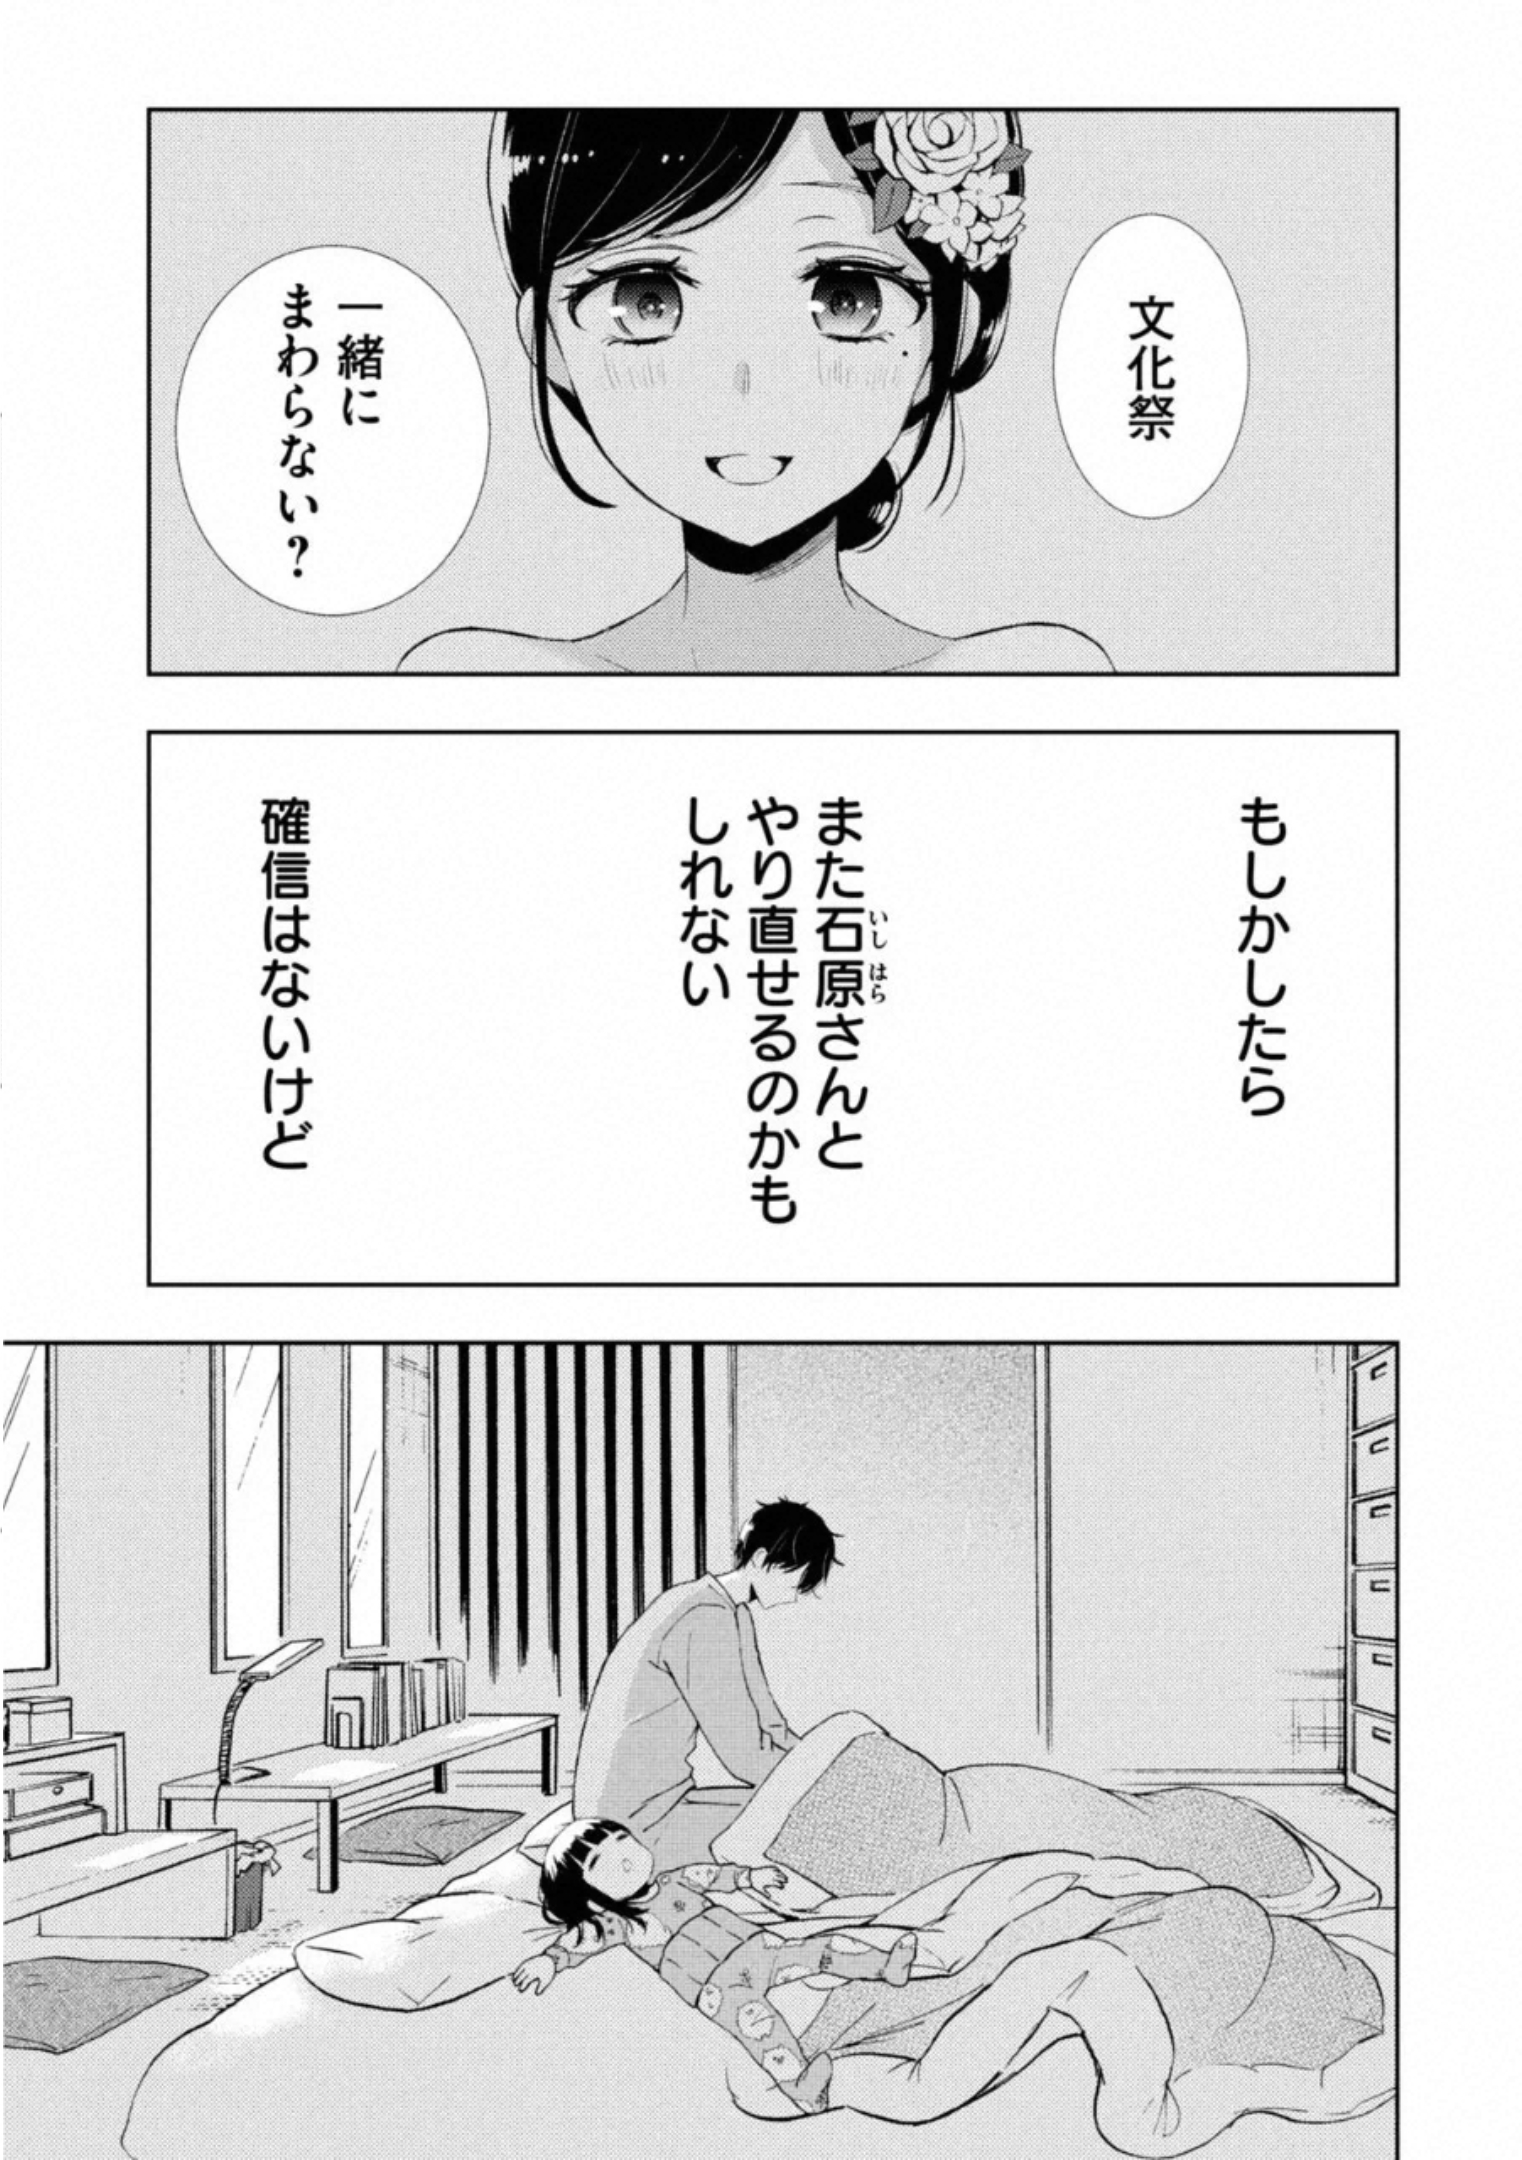 Watari-kun no xx ga Houkai Sunzen - Chapter 57 - Page 1